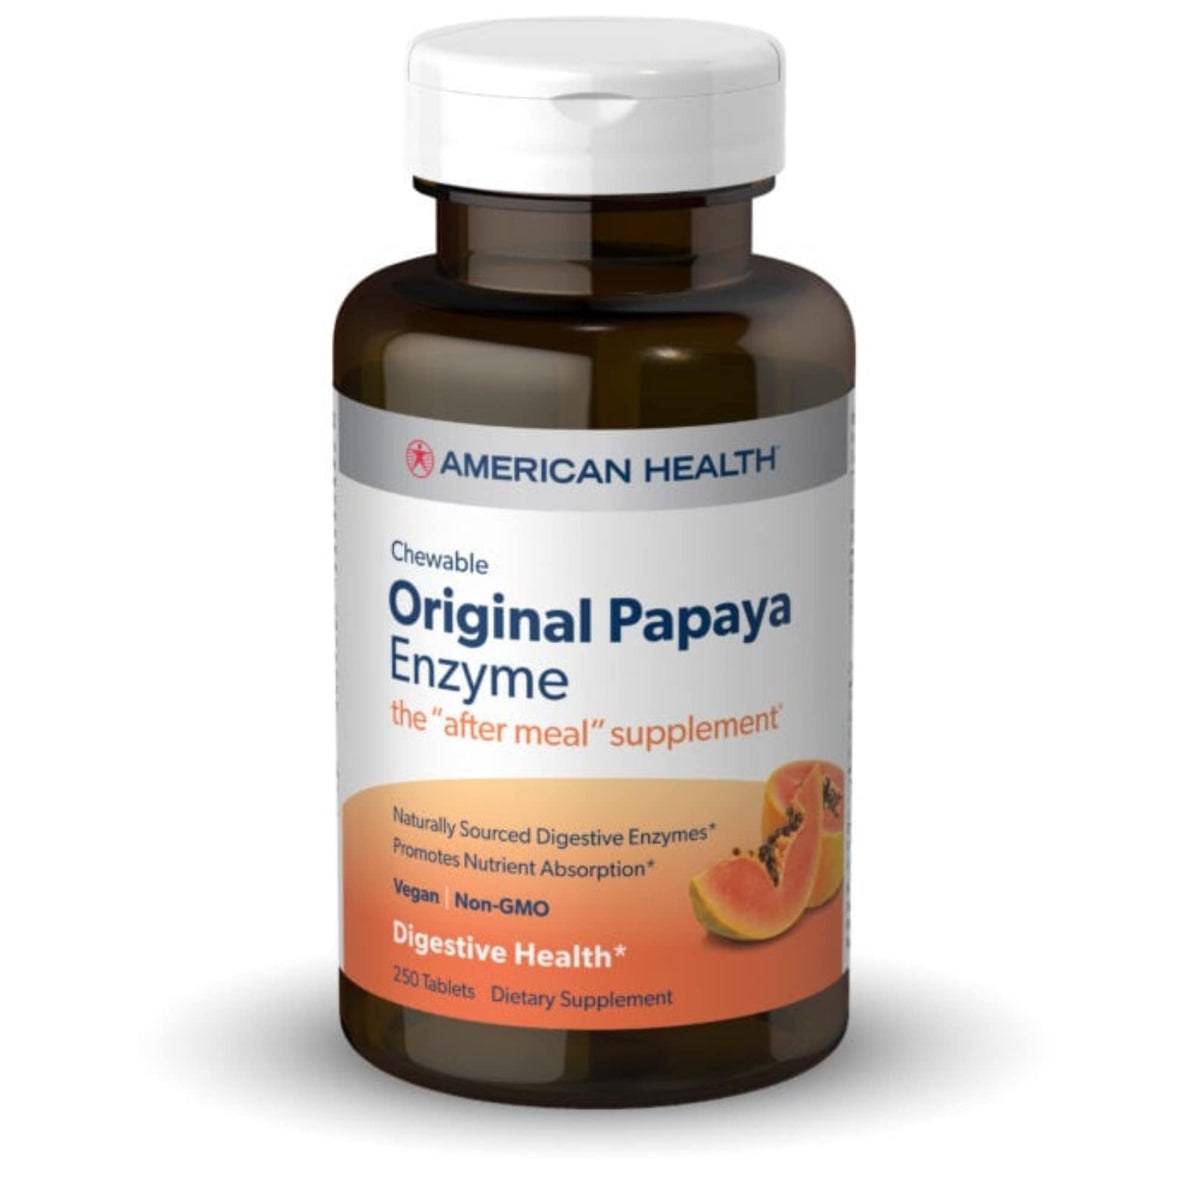 Primary Image of Original Papaya Enzyme Tables